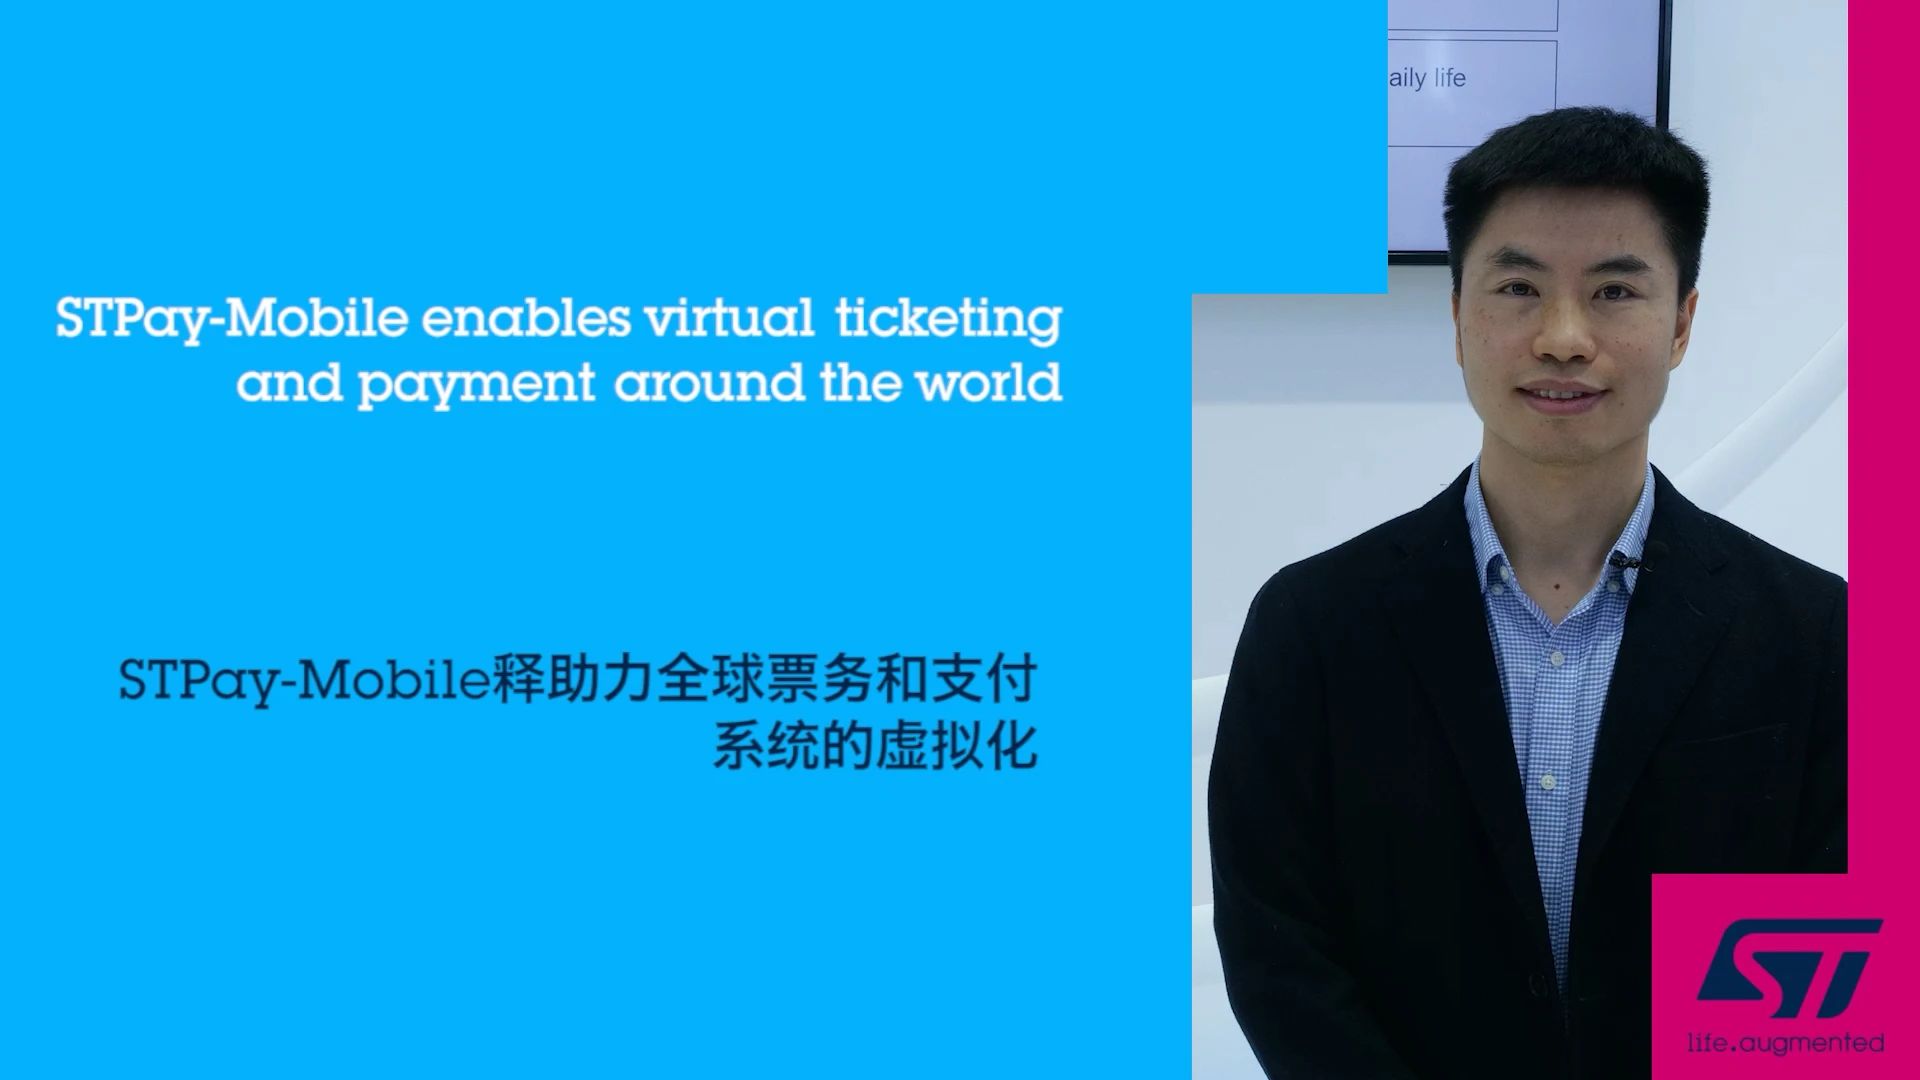 STPay-Mobile助力全球票务和支付系统的虚拟化 - MWC2021上海